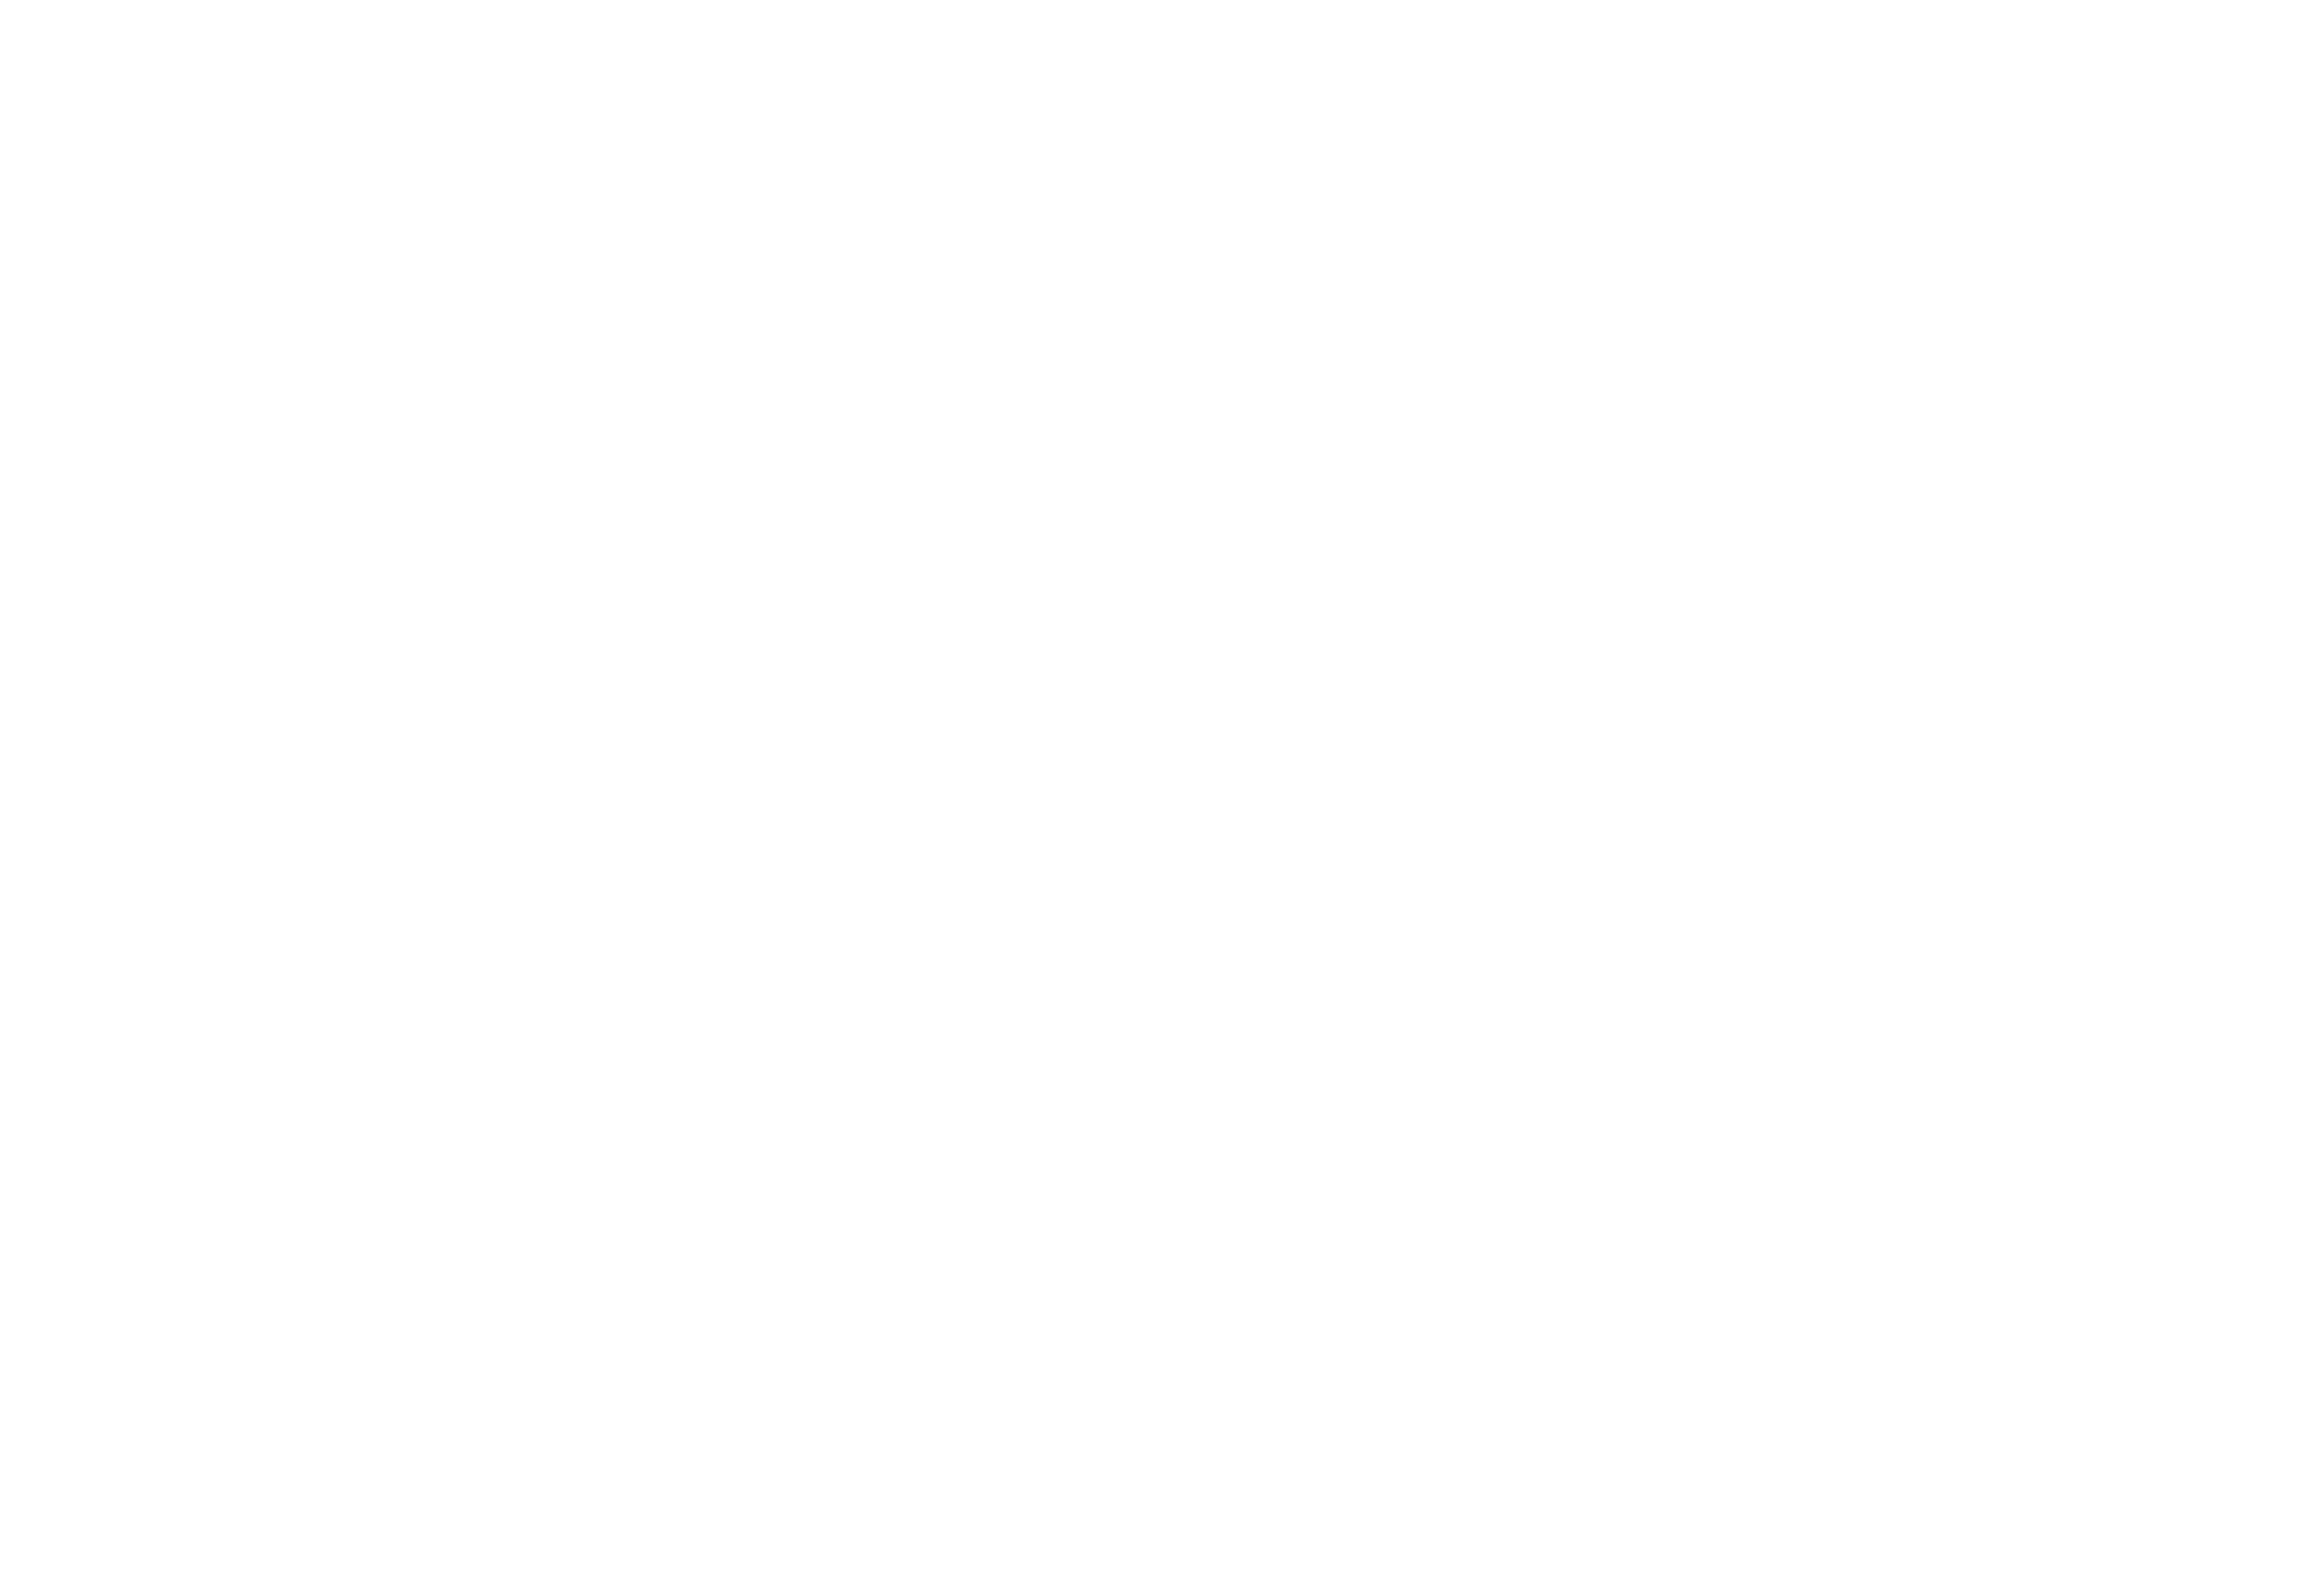 Turner Creek Farm